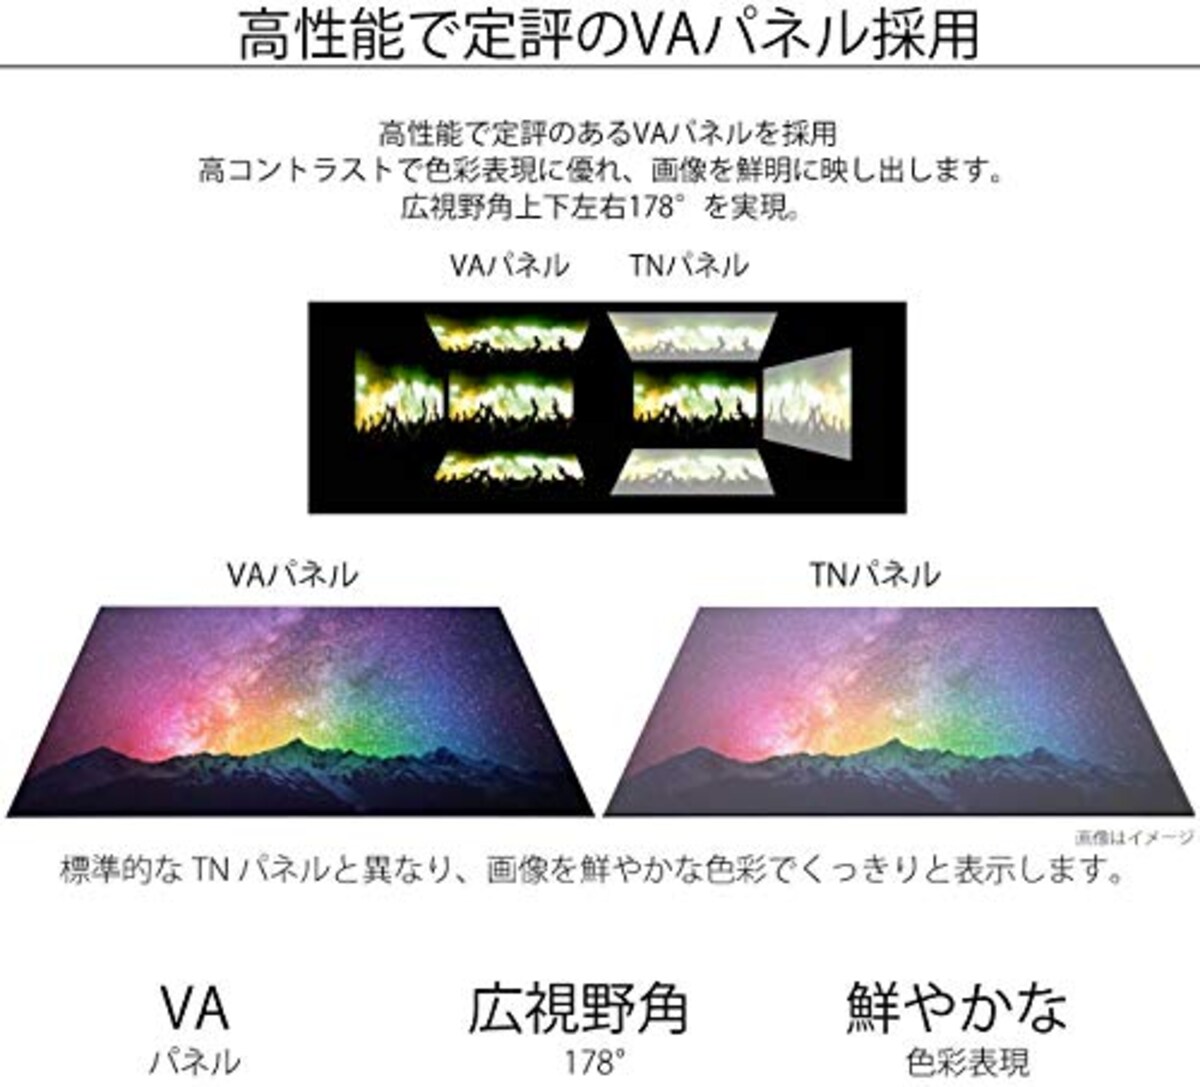  JAPANNEXT 31.5インチ Full HD(1920 x 1080) 液晶モニター JN-V315FHD HDMI VGA DVI画像3 